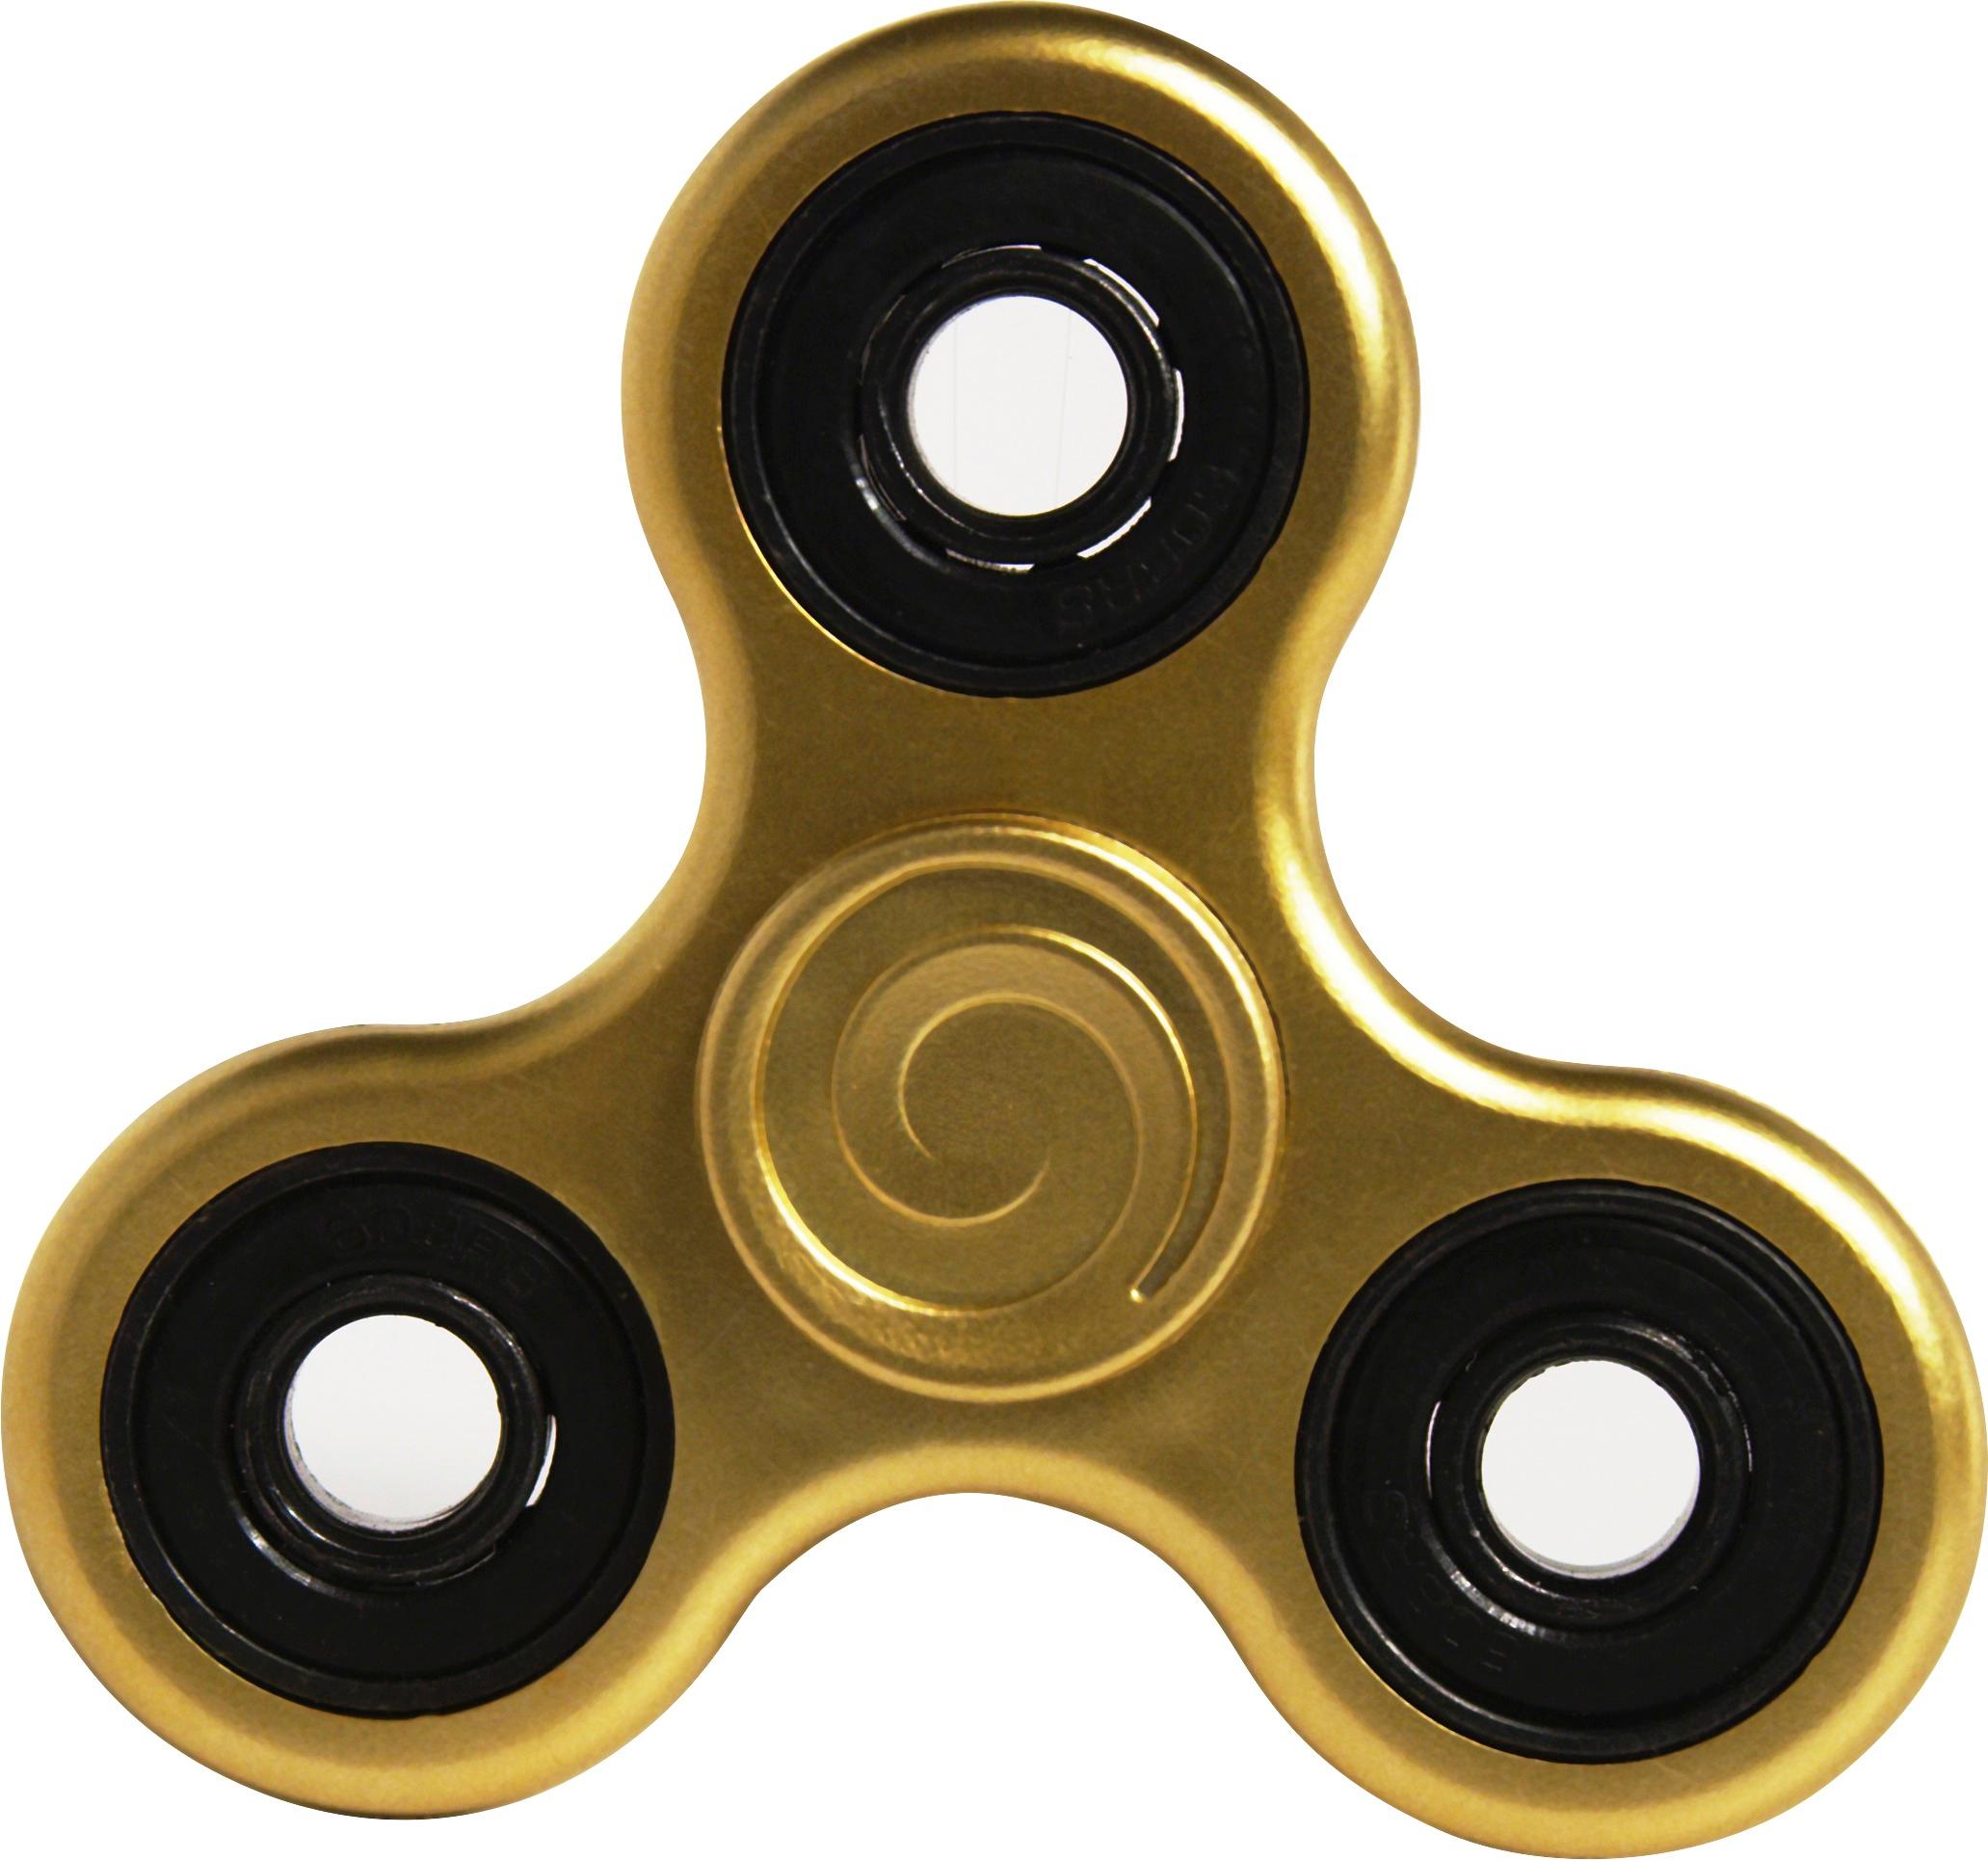 Underinddel mixer klik Best Buy: Fidgetly Fidget Spinner Toy Stress Reducer Gold/Black 5015